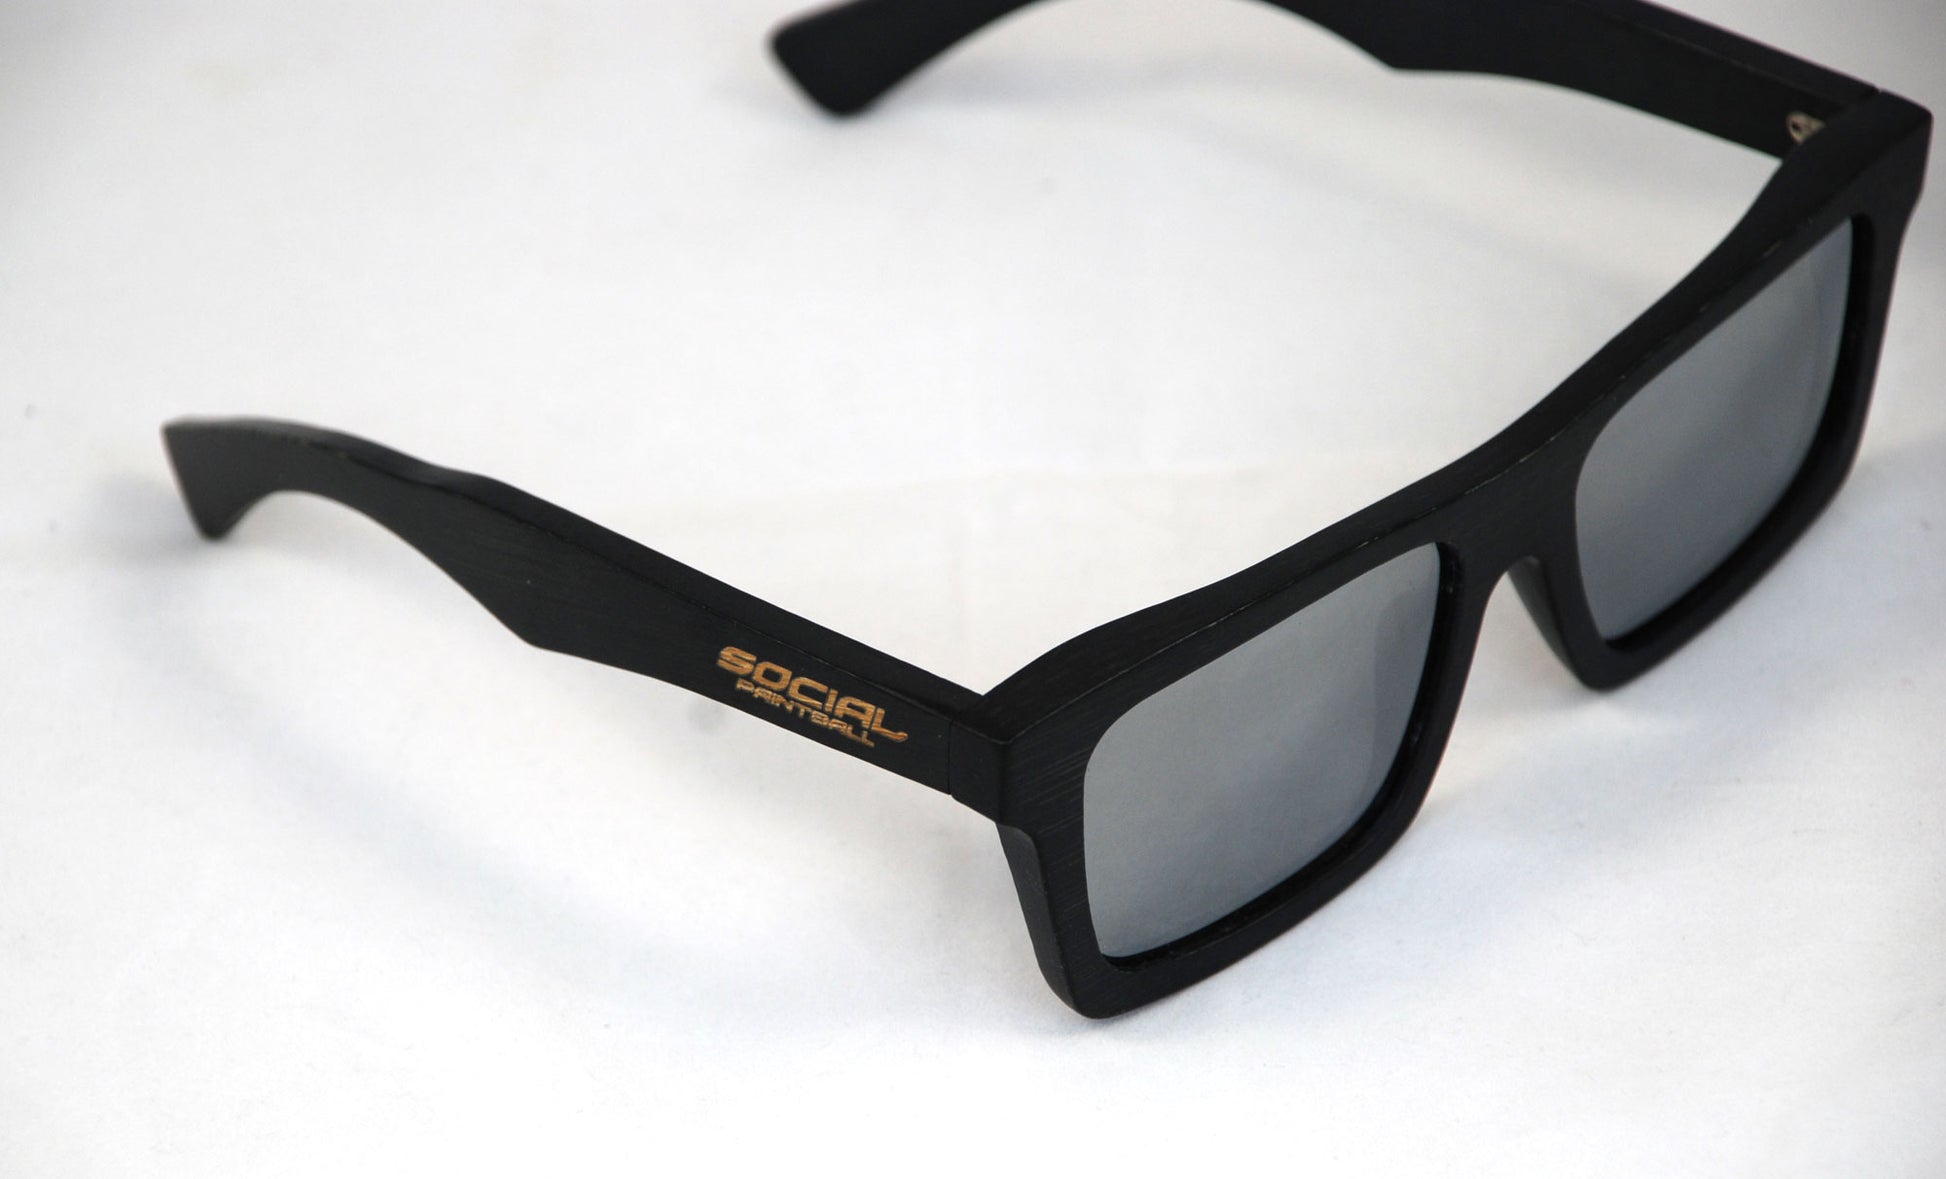 Social Paintball Sunglasses - Black Bamboo with Silver Lens - Social Paintball